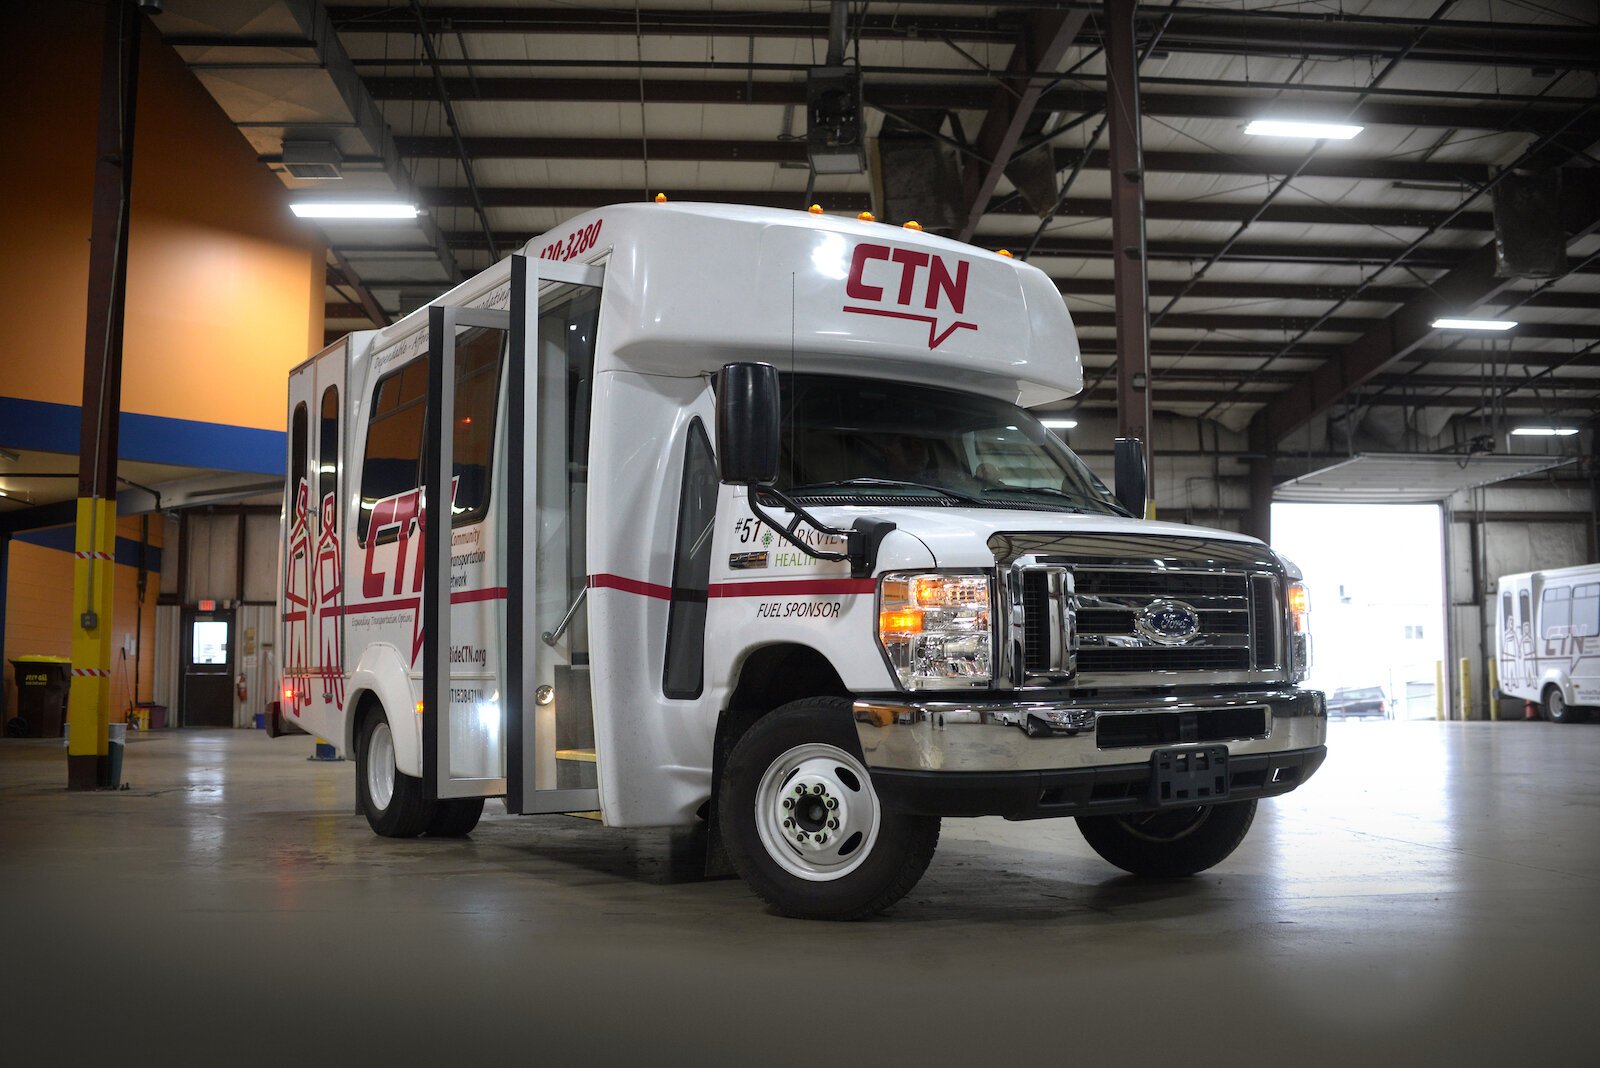 A Community Transportation Network bus.